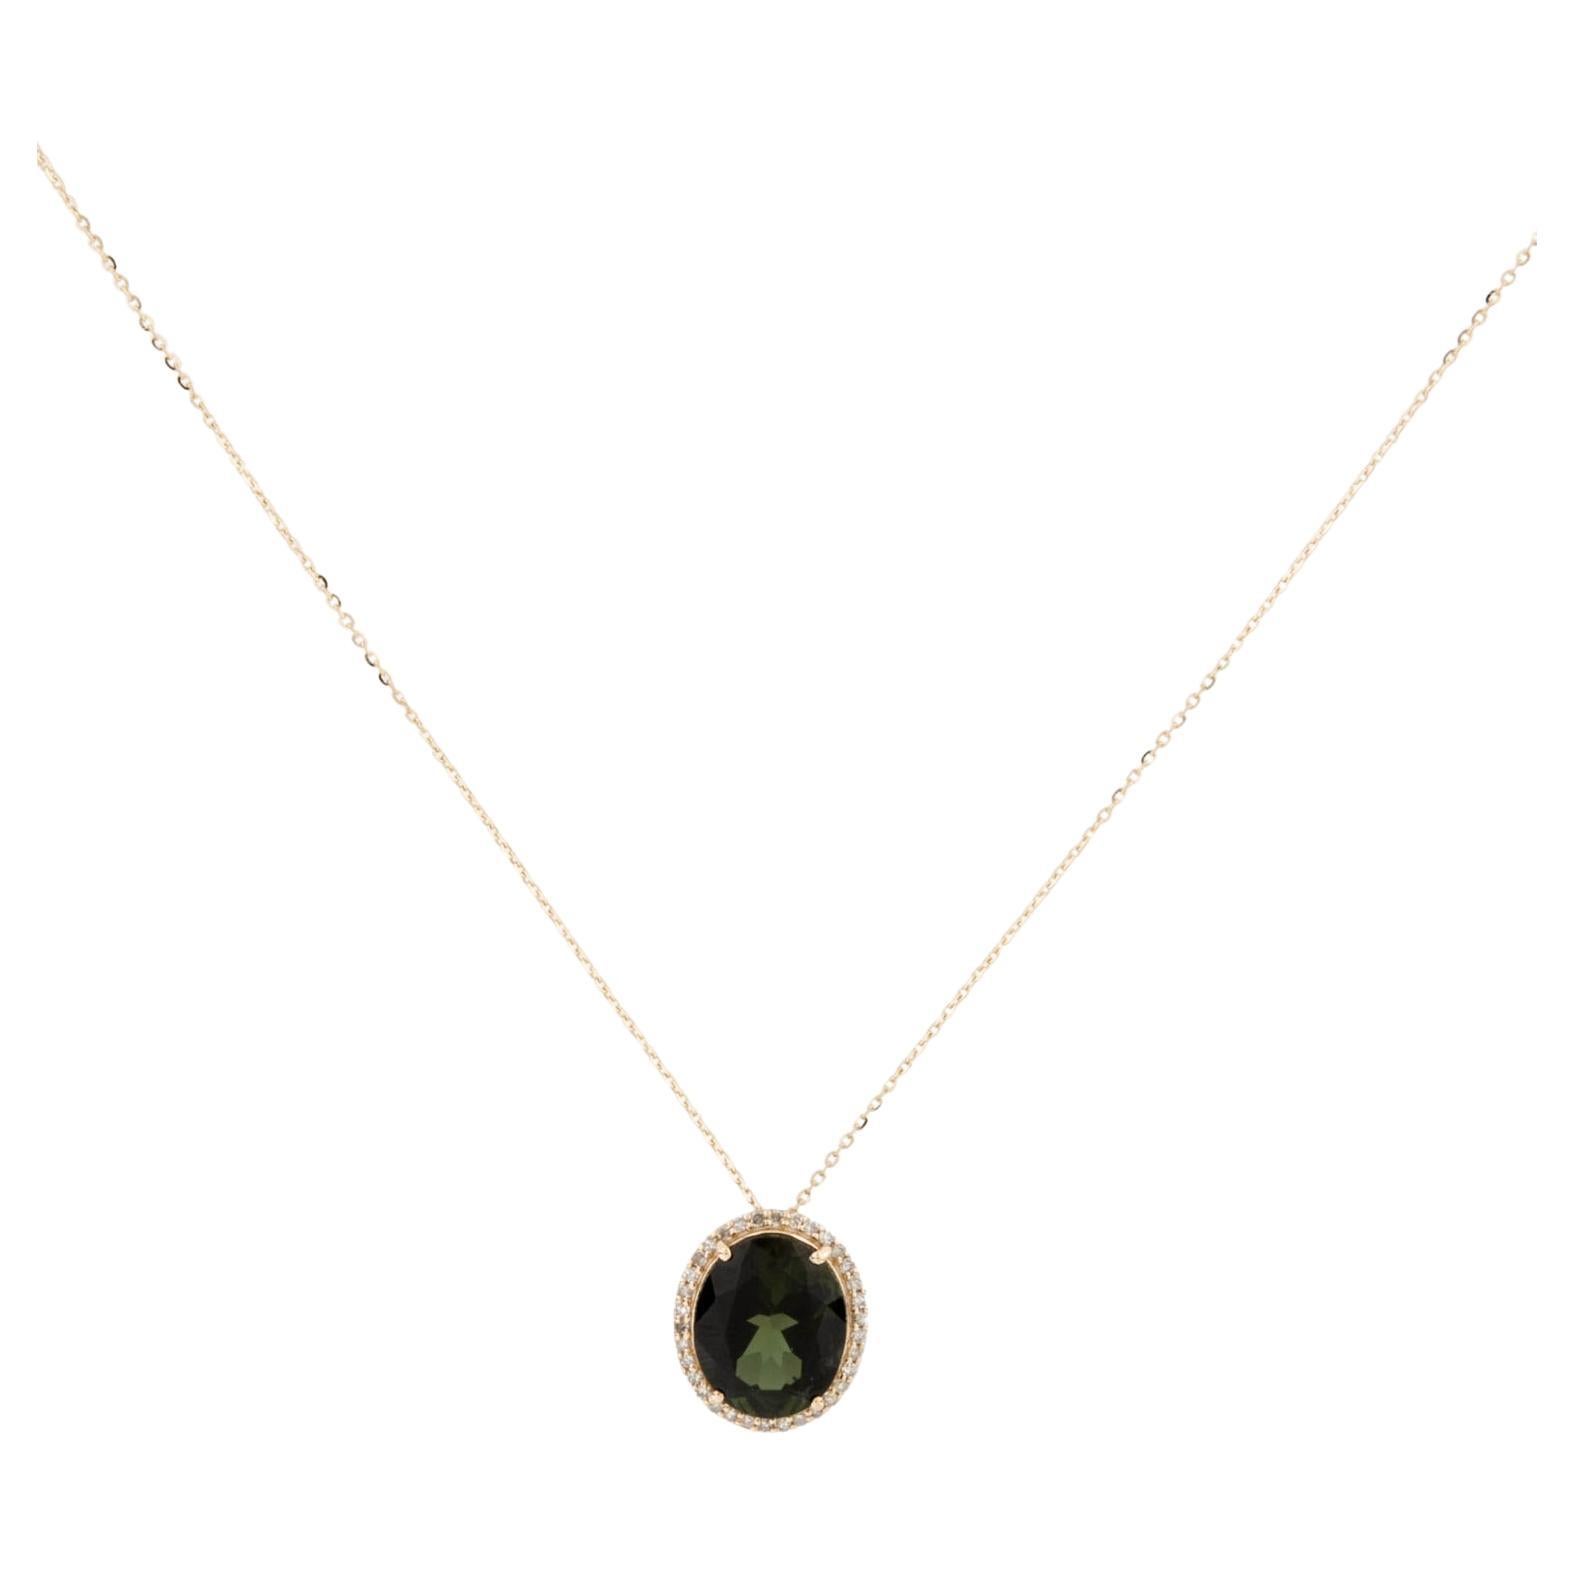 14K Tourmaline & Diamond Pendant Necklace - Exquisite Gemstone Jewelry Statement